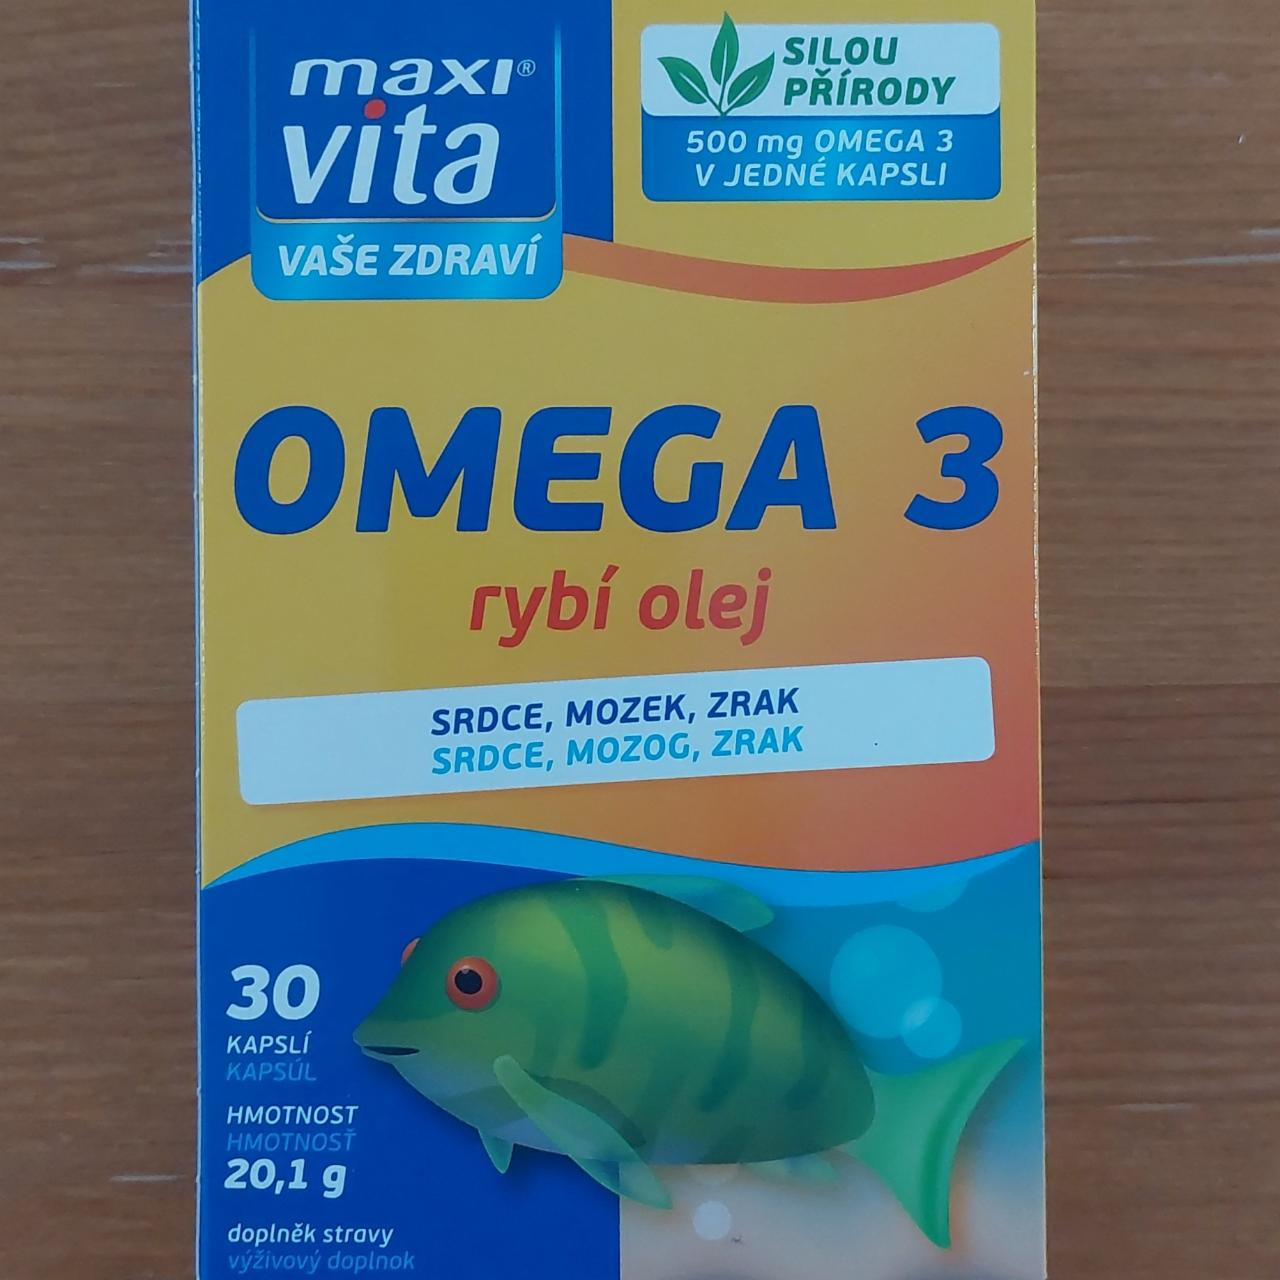 Fotografie - OMEGA 3 rybí olej maxi vita